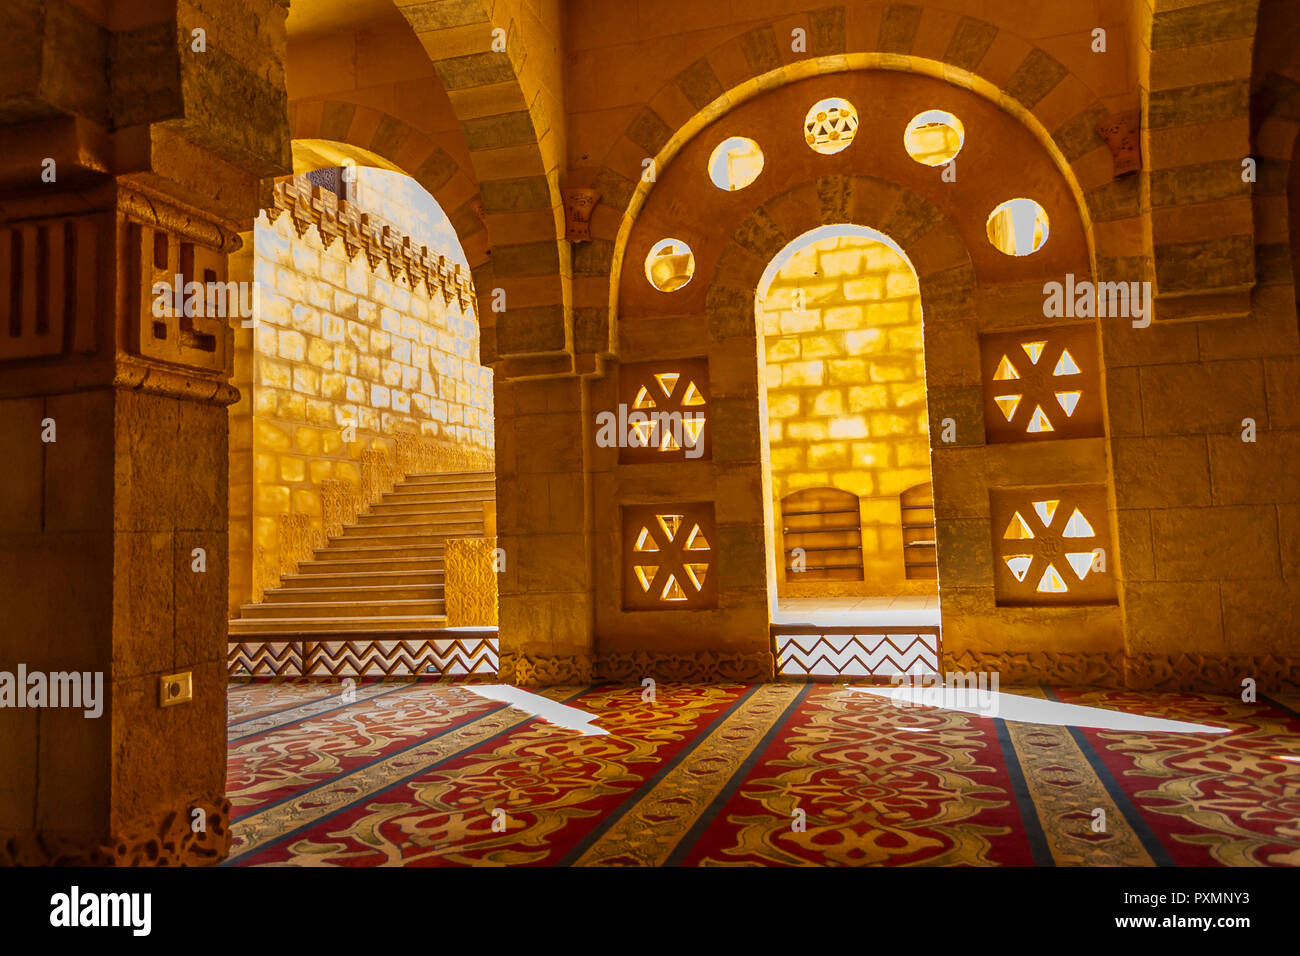 Al interior de la mezquita Mustafa, el Sinaí, Egipto Foto de stock